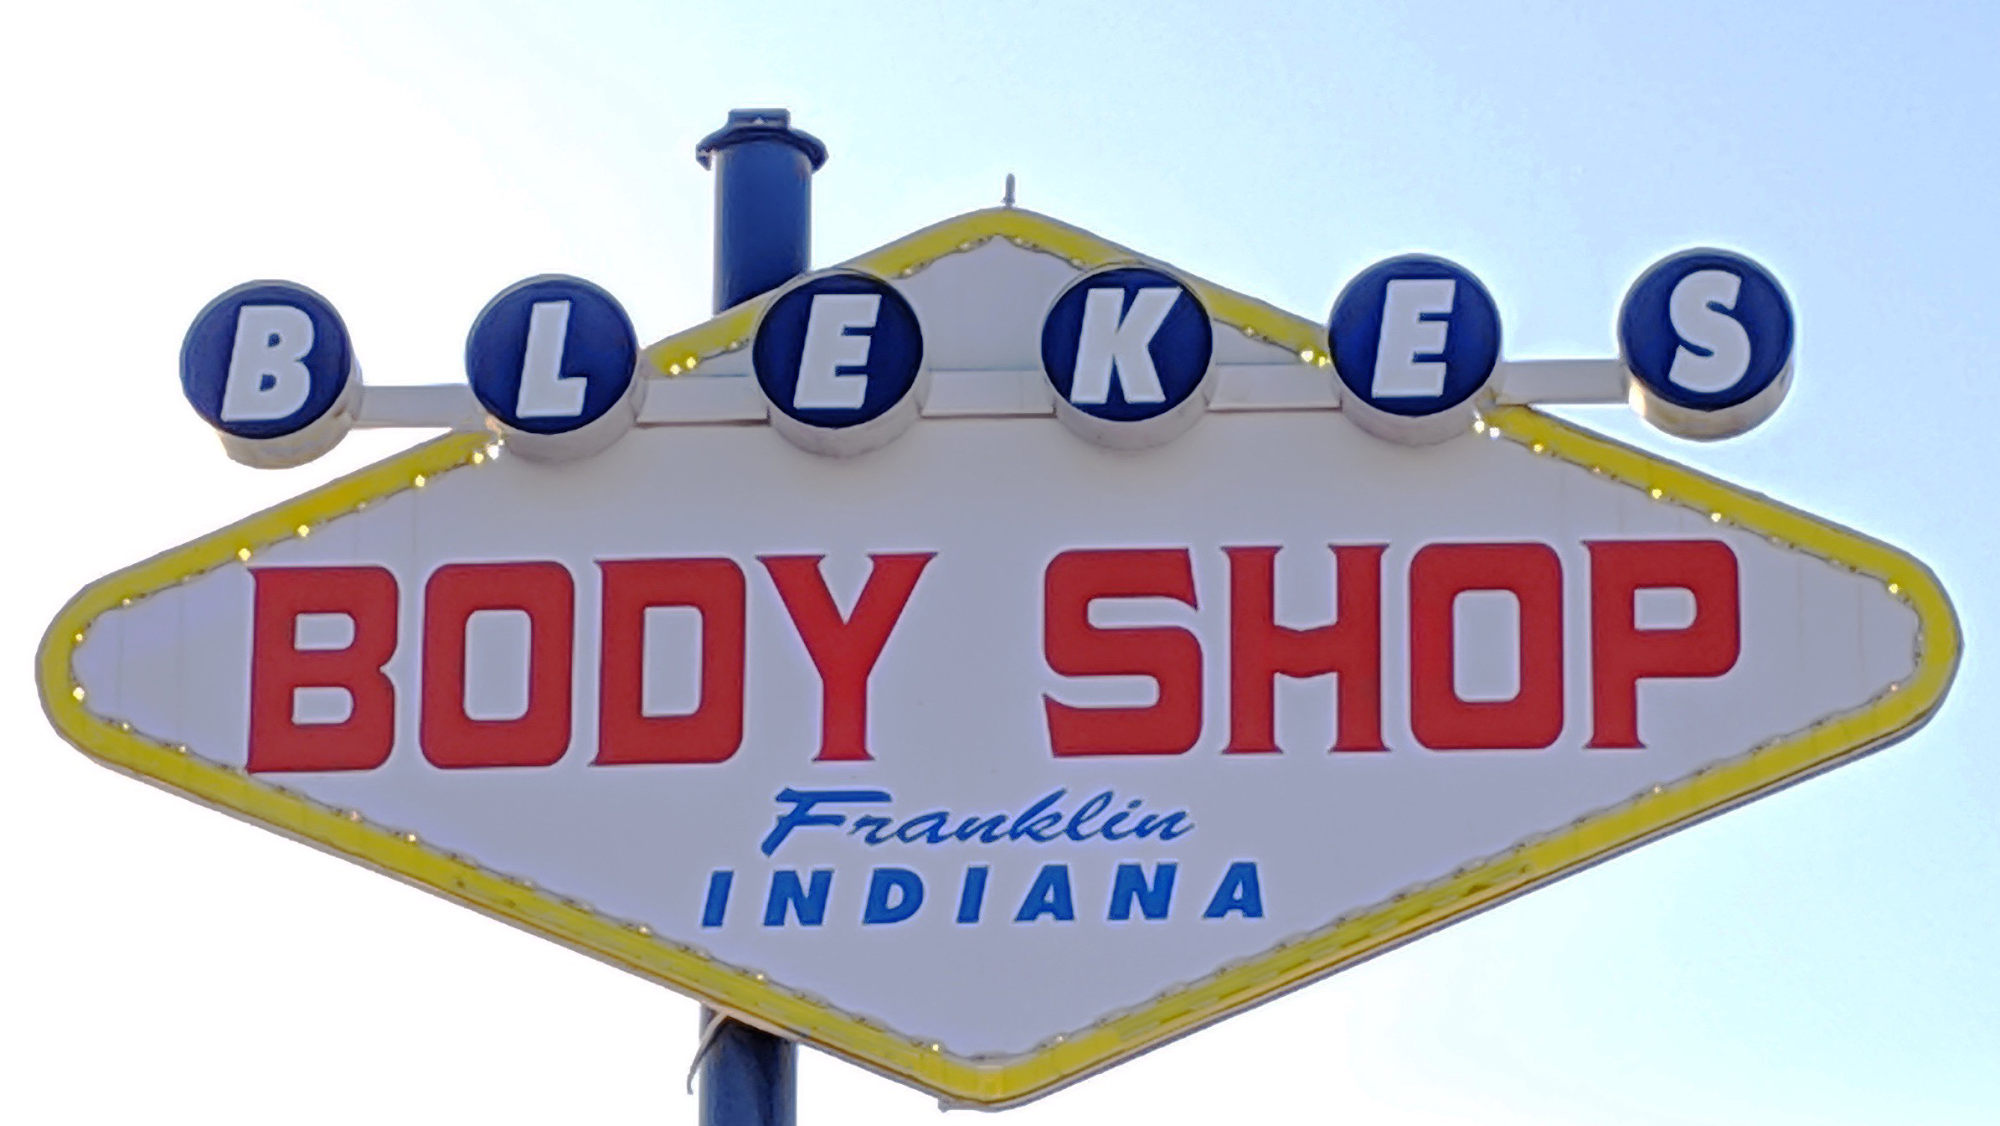 Bleke's Body Shop